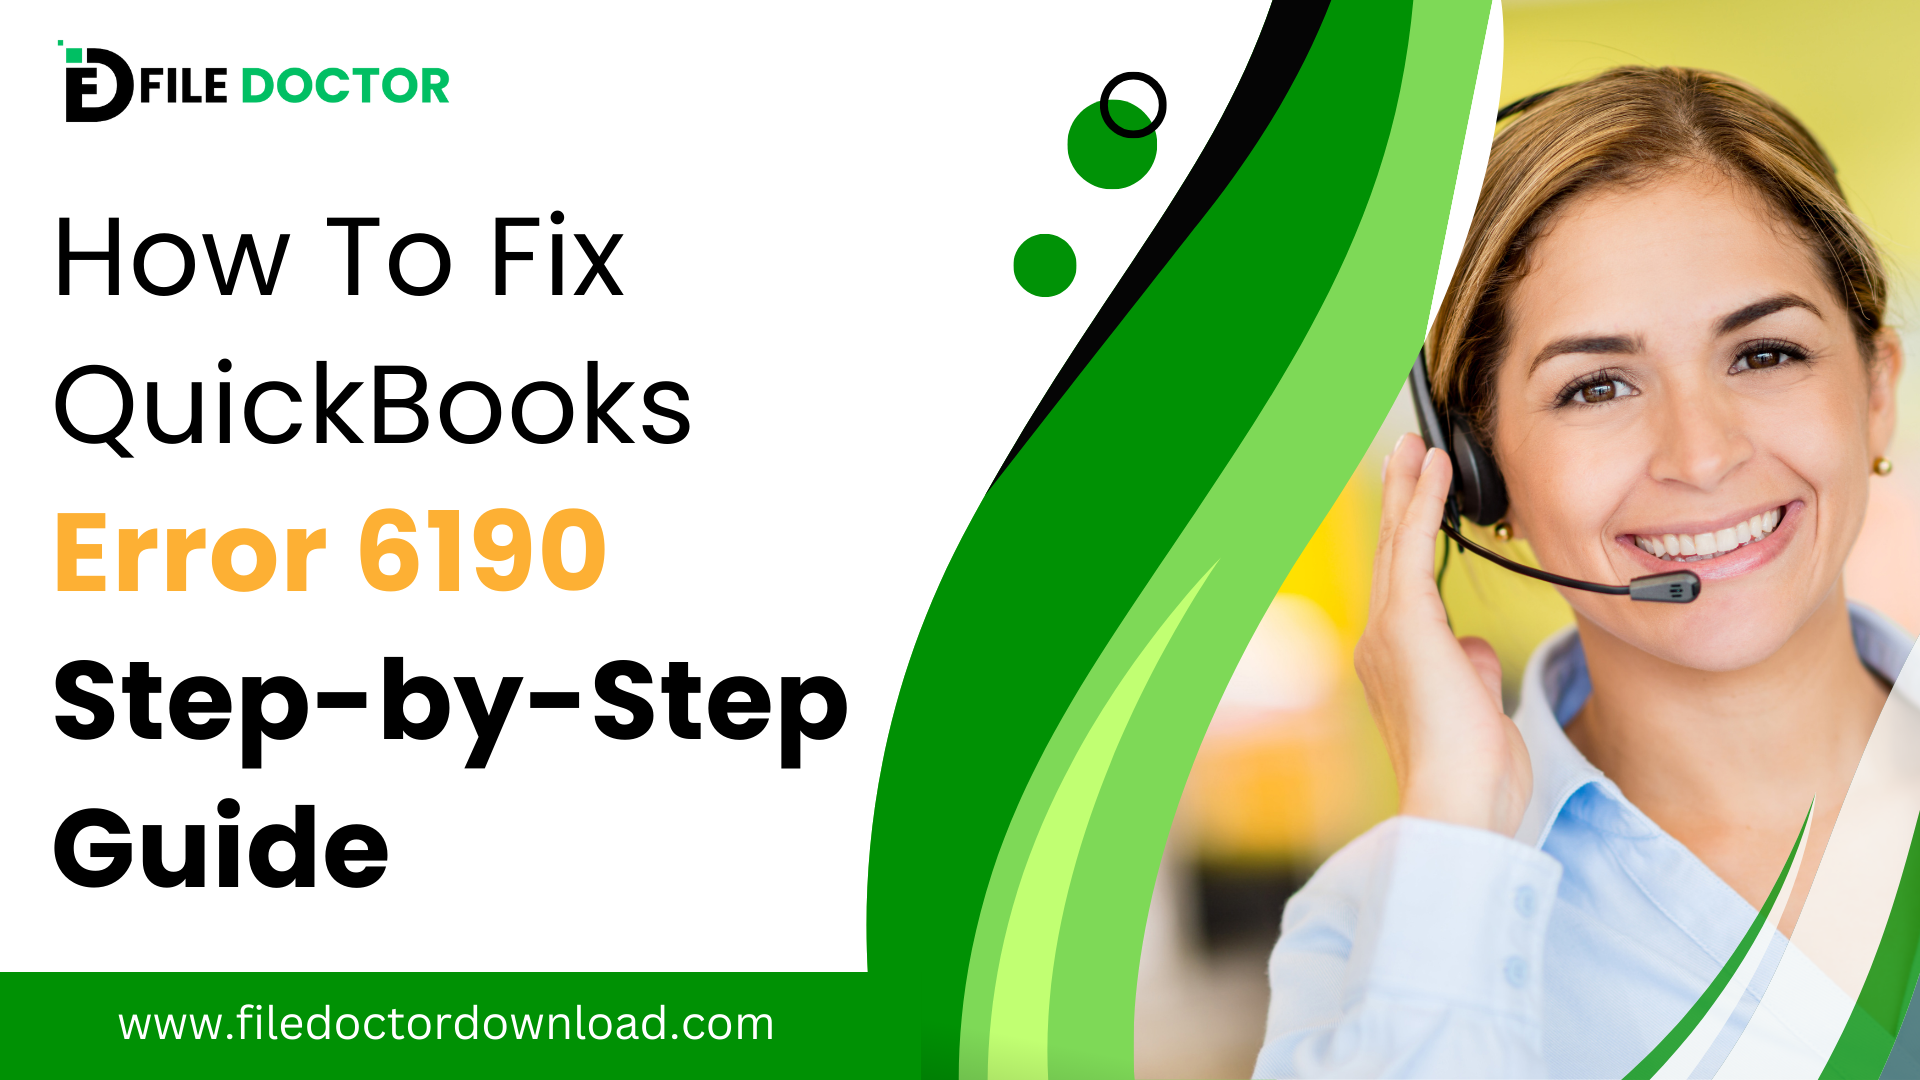 How To Fix QuickBooks Error 6190